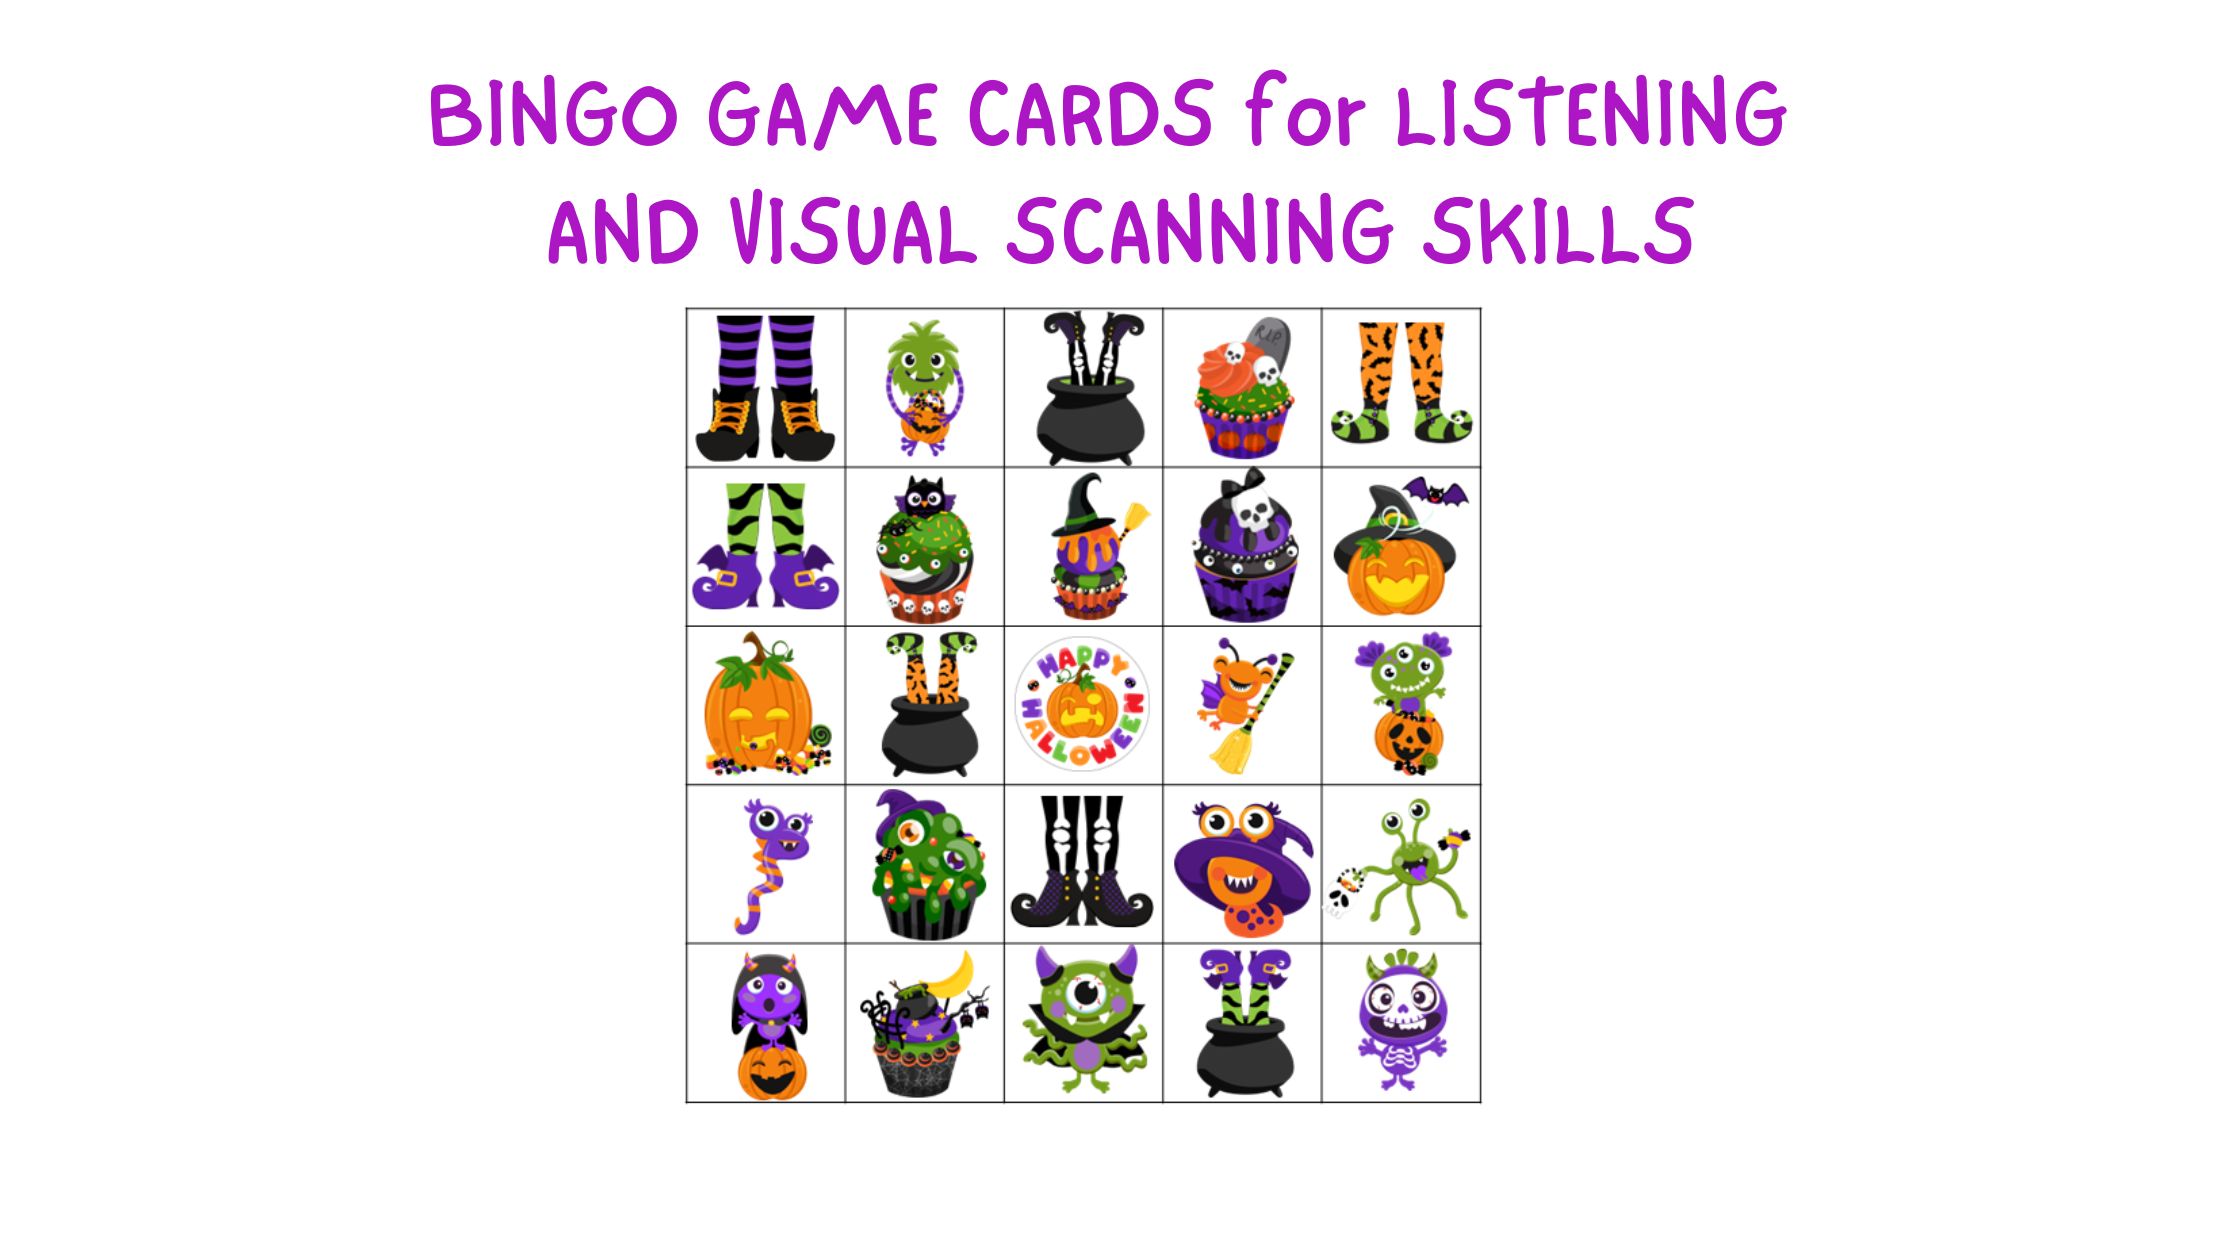 Bingo Games for Listening and Visual Skills